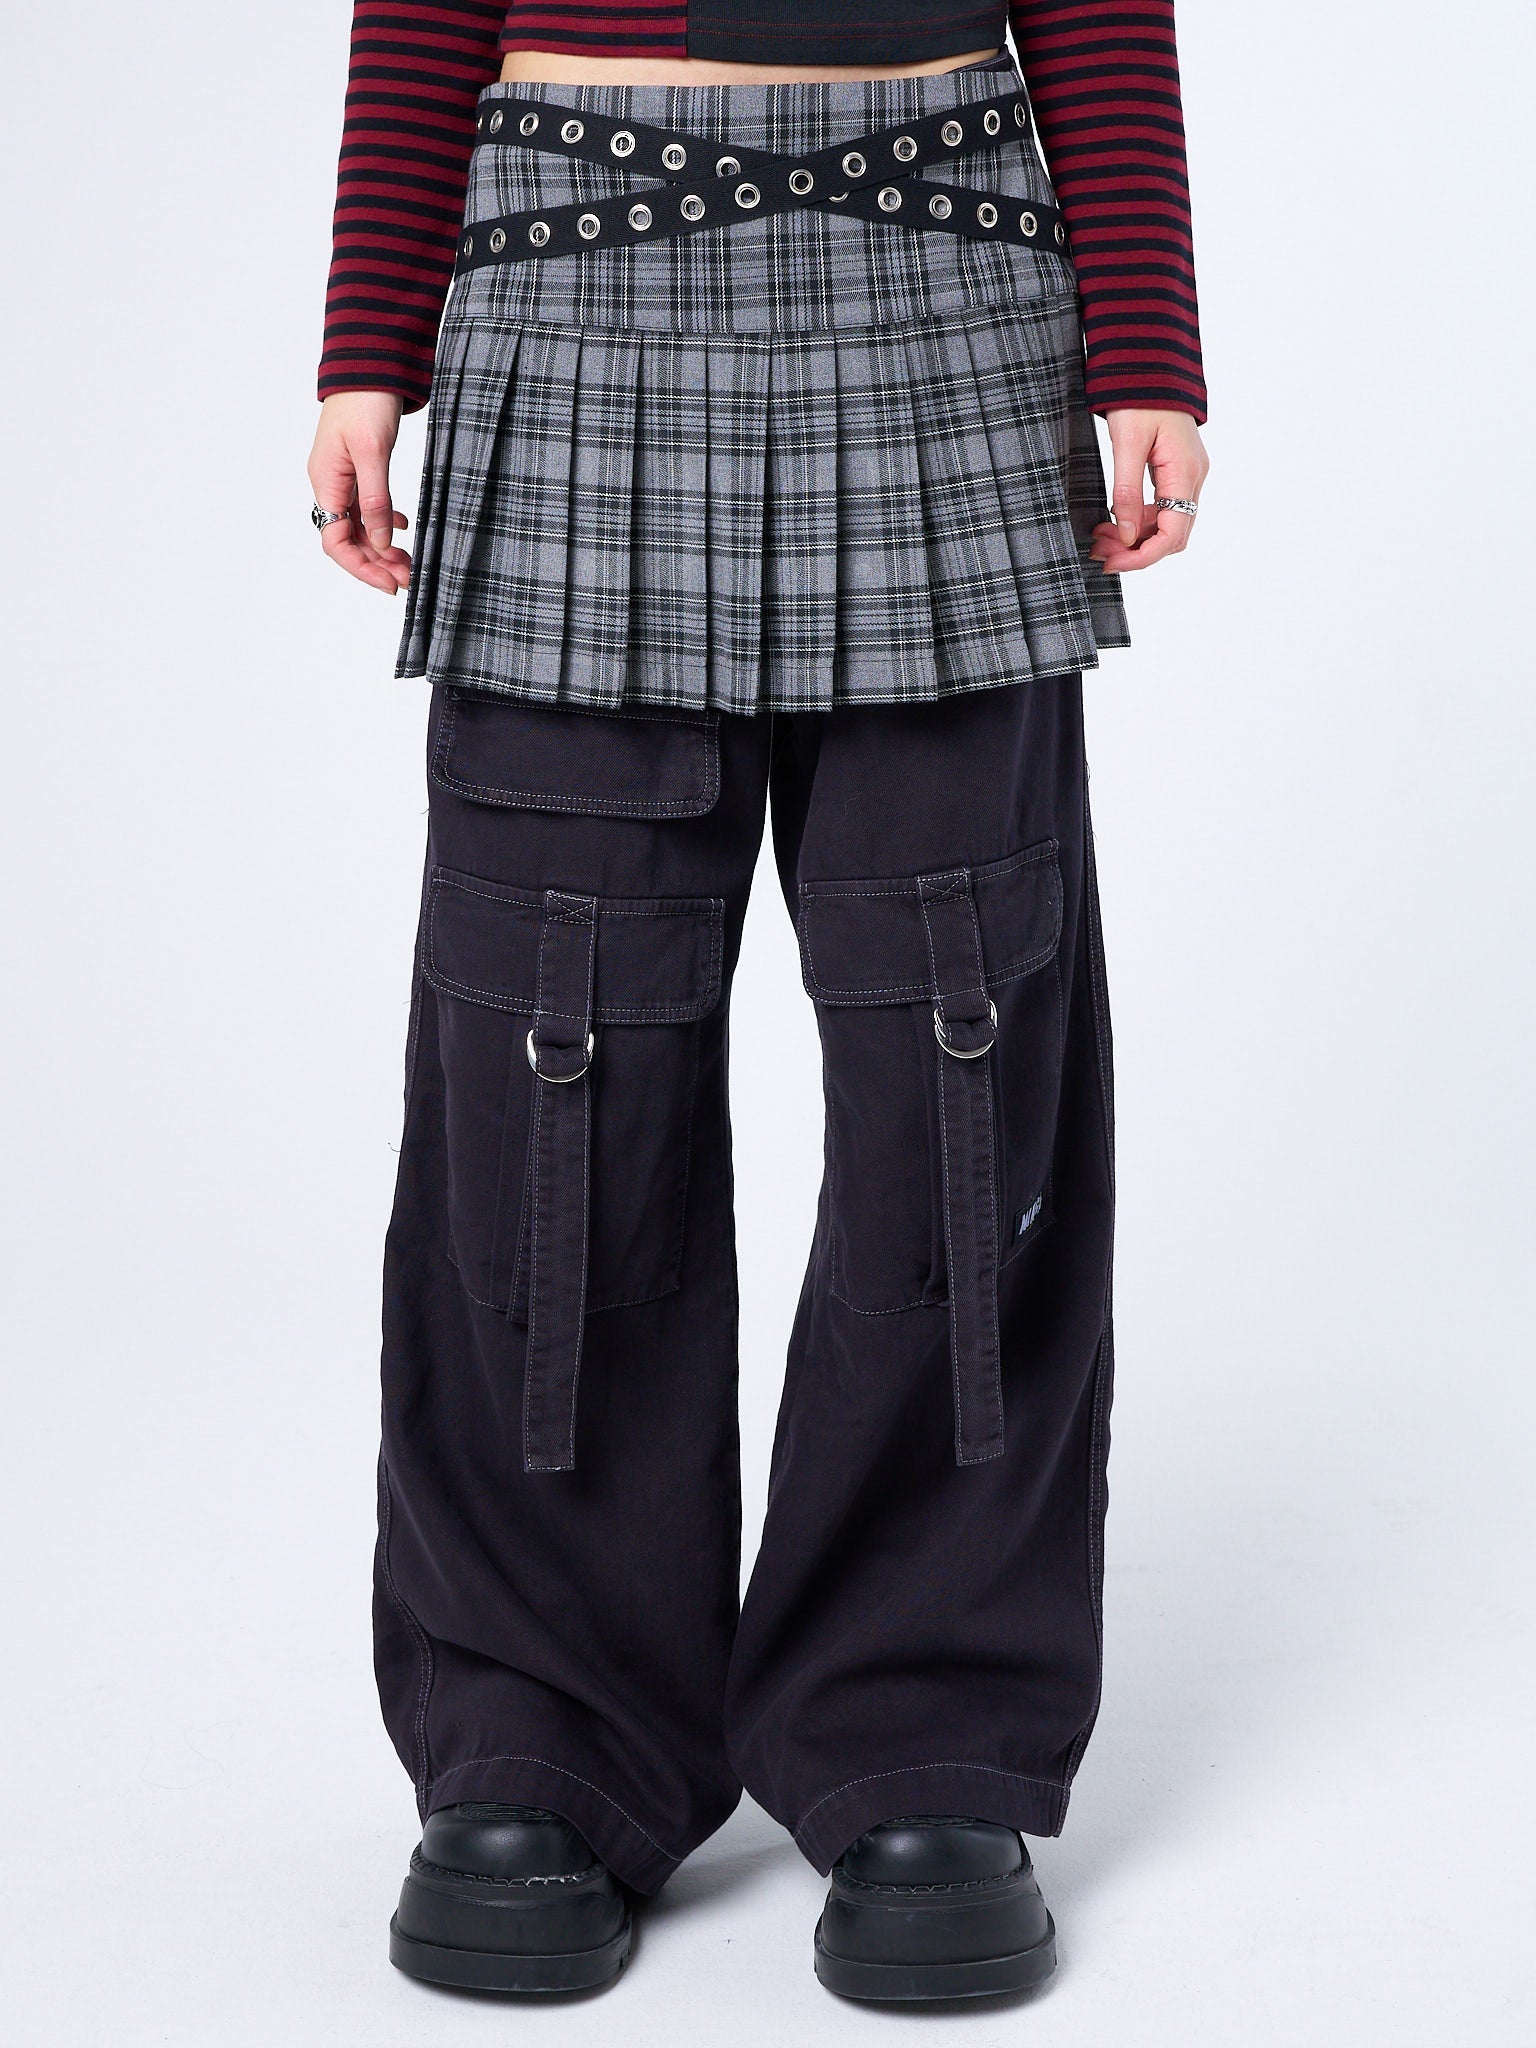 Meryl Grey & Black Tartan Mini Skirt product